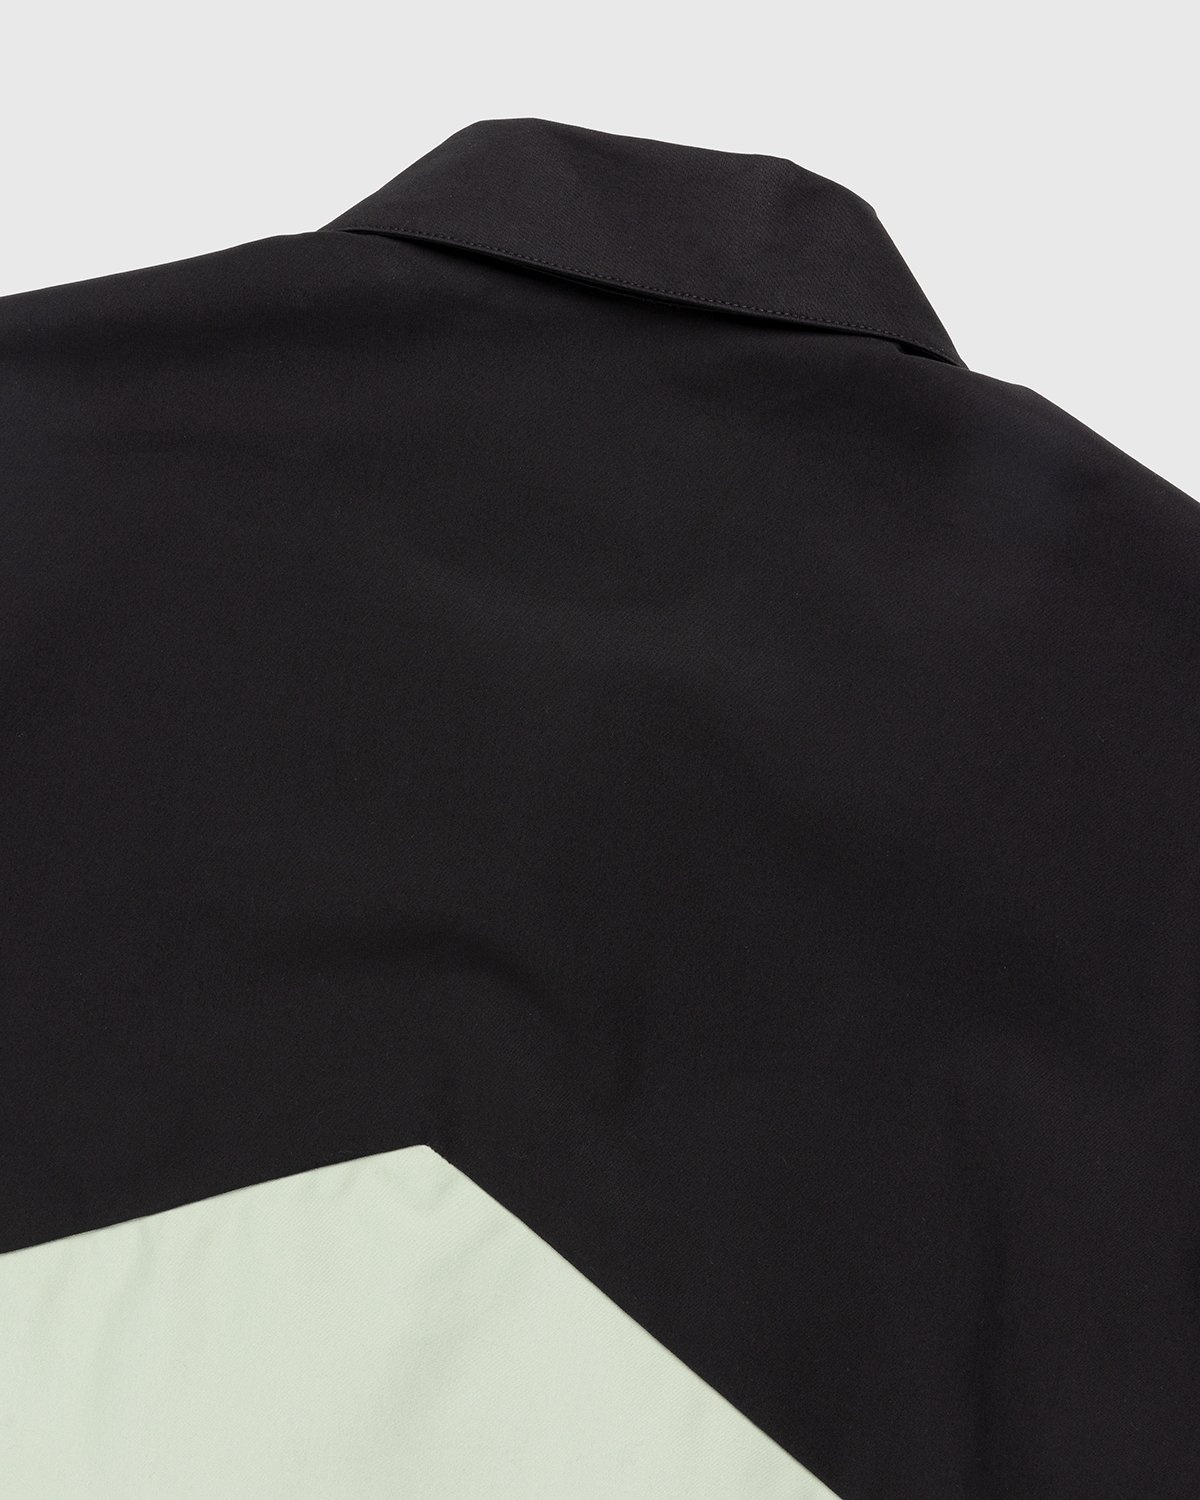 Jil Sander – Two-Tone Diagonal Cut Shirt Black/Green - Shirts - Green - Image 3